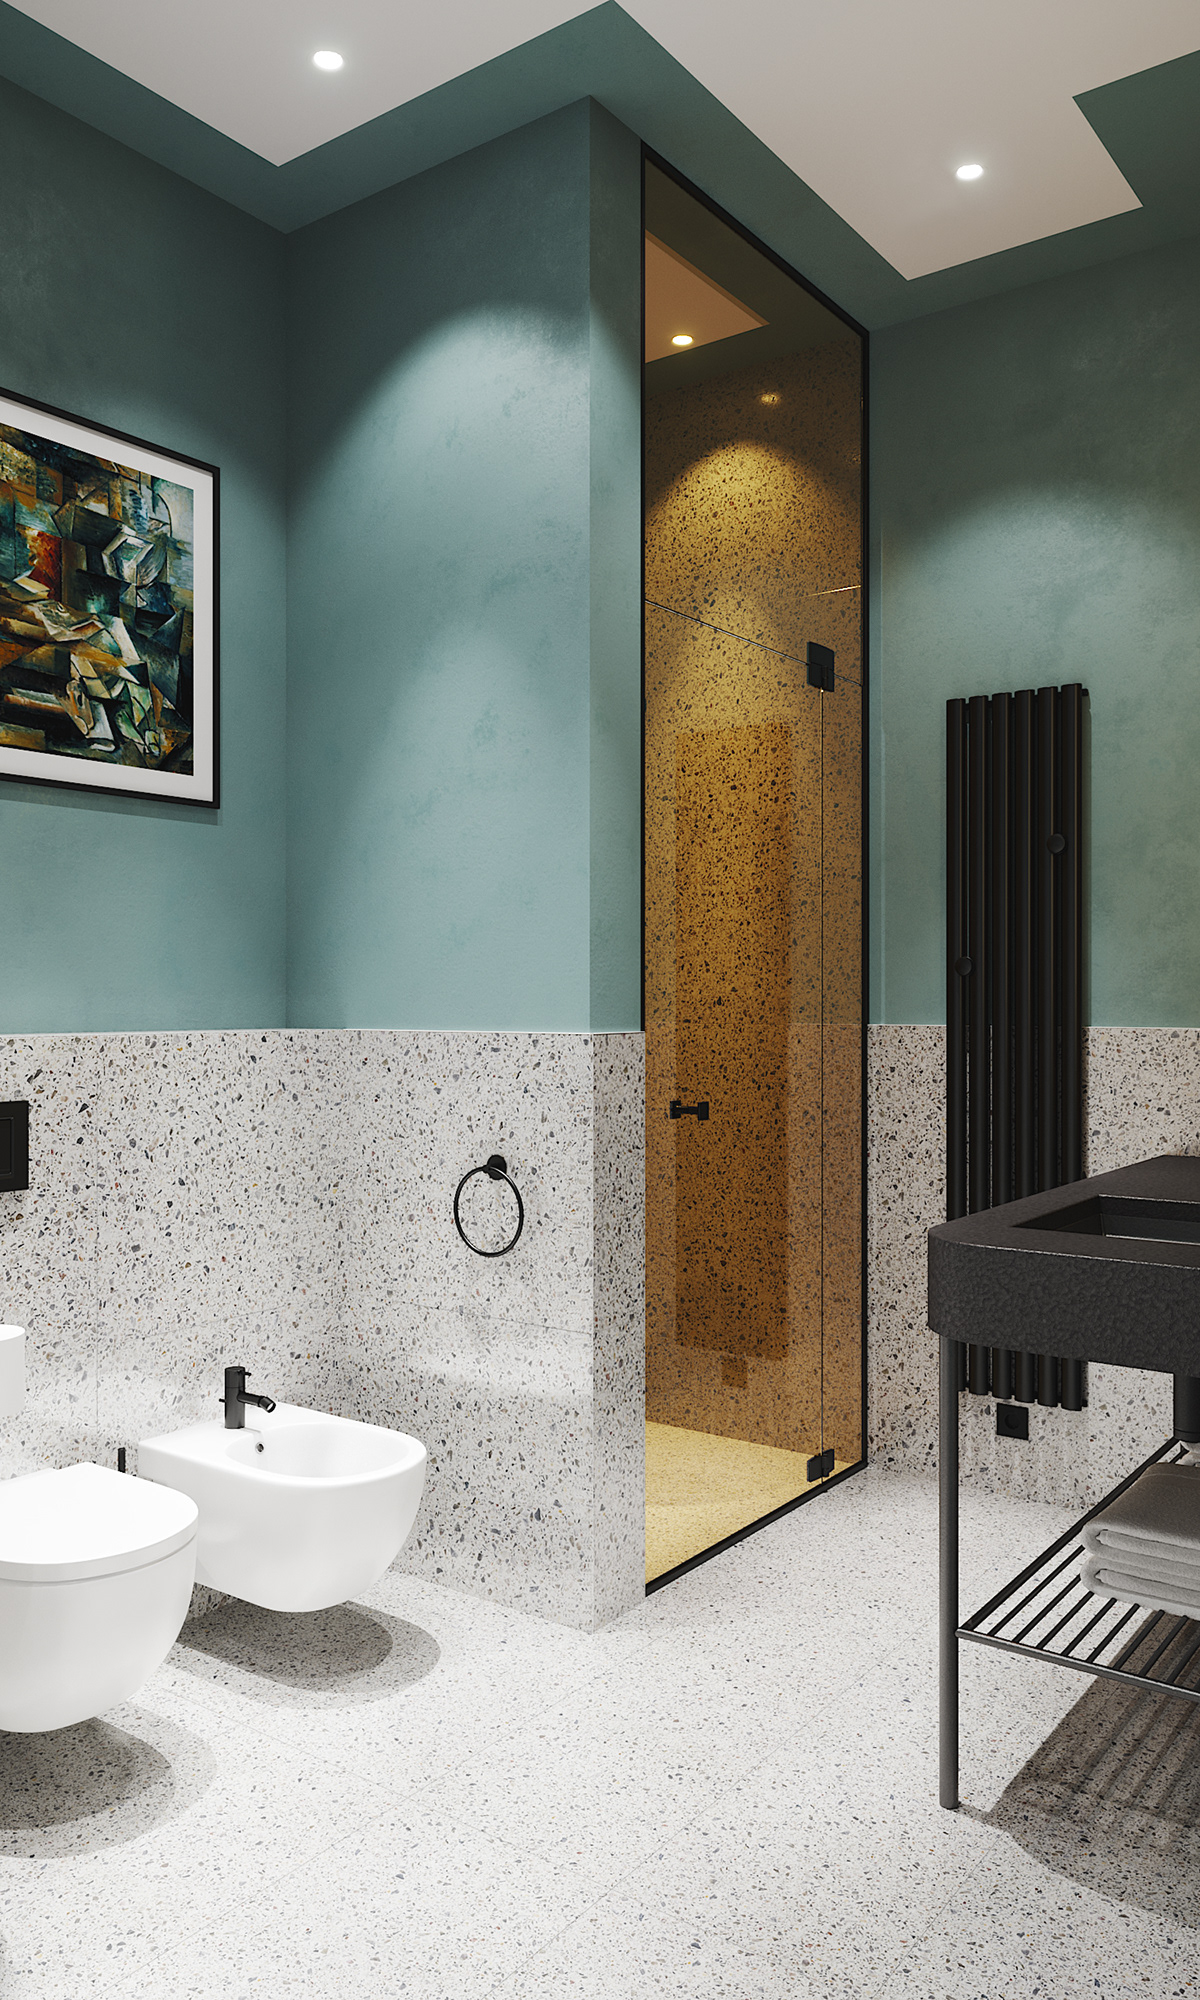 3ds max corona render  Render 3D Interior exterior bathroom visualization